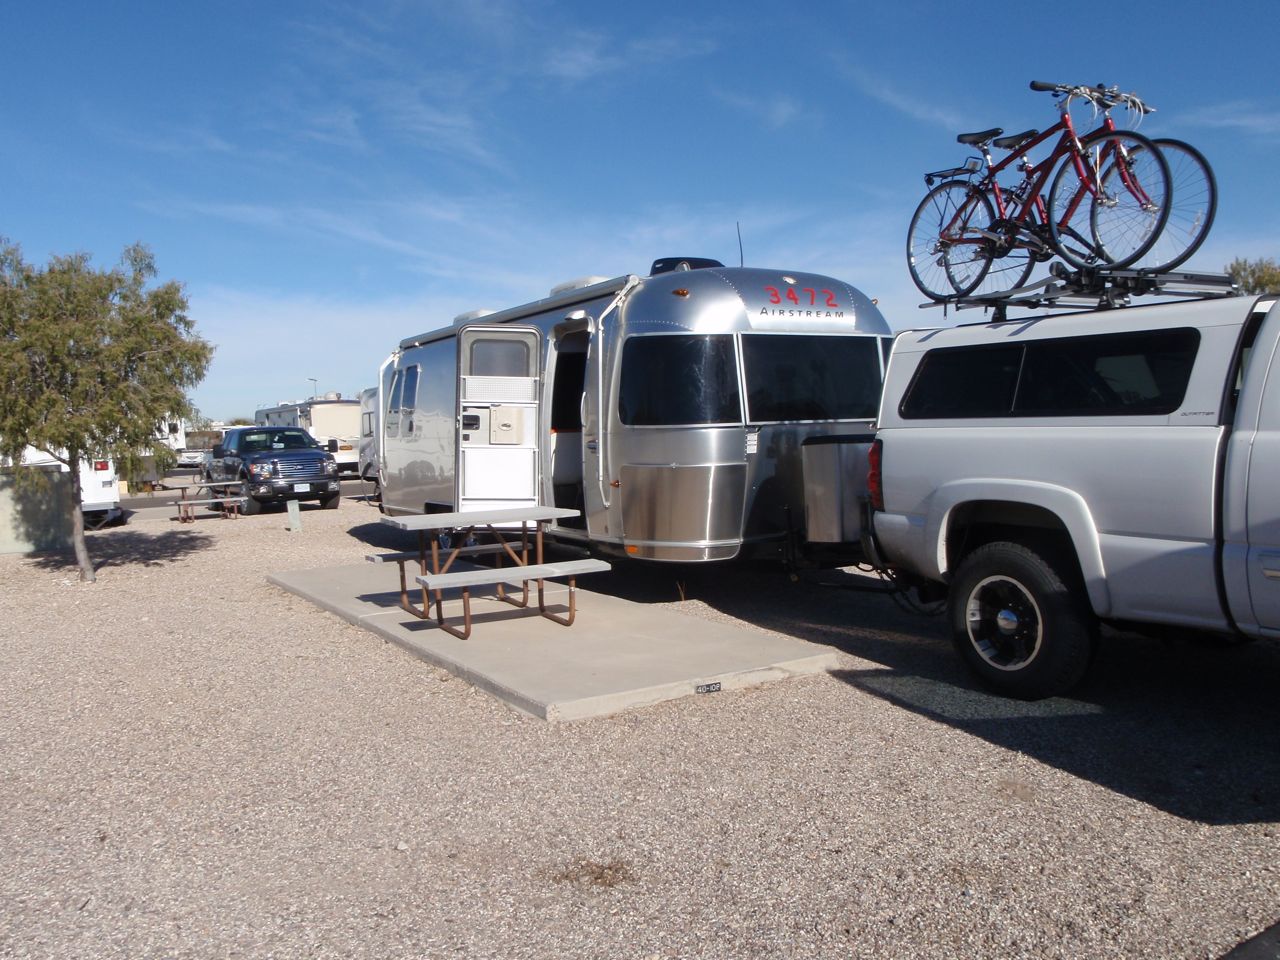 Voyager RV Park in Tucson, Arizona